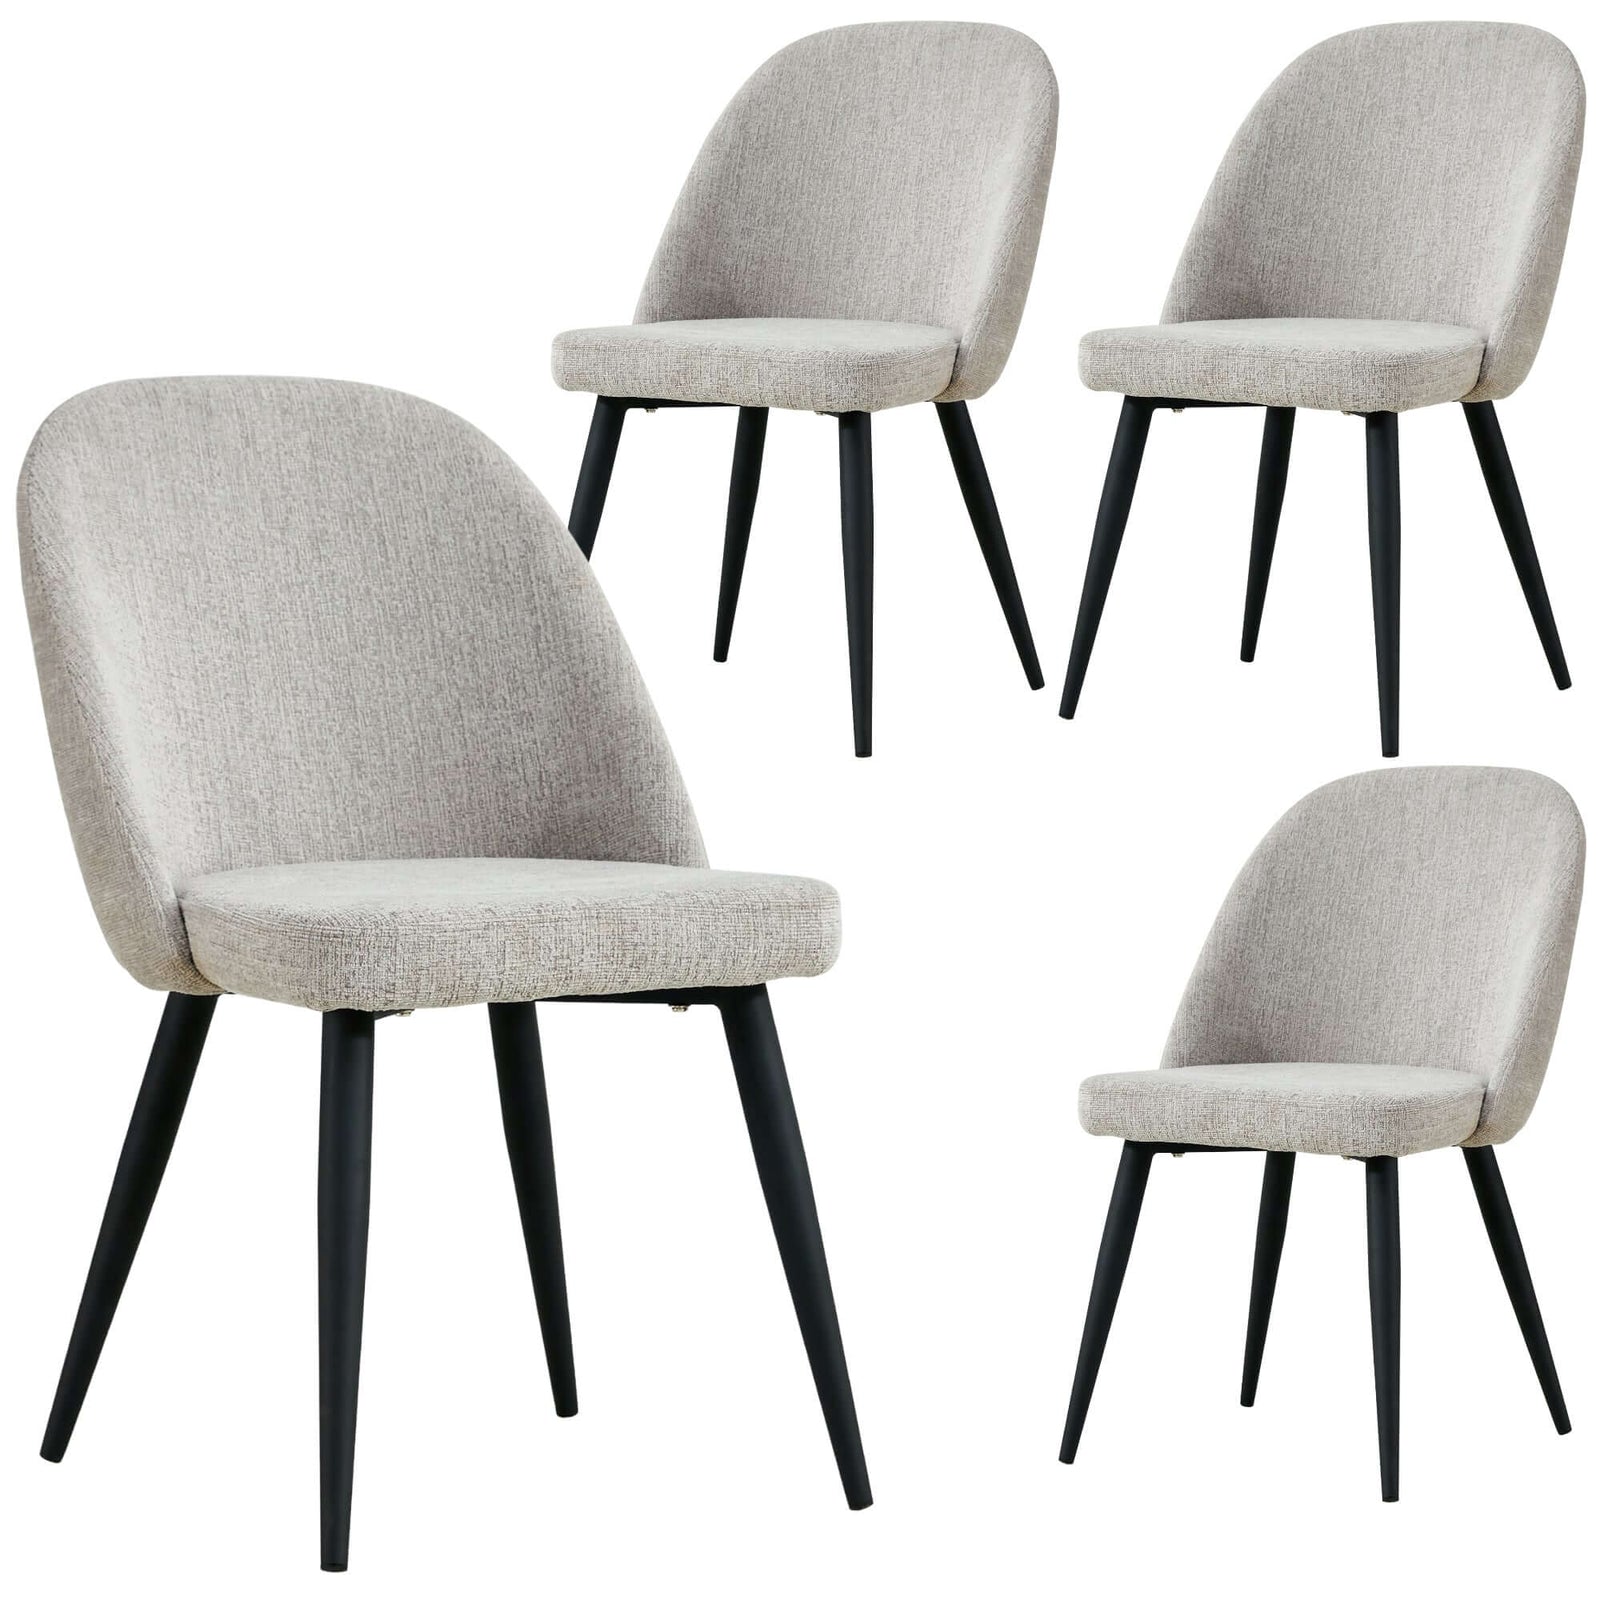 Erin Dining Chair Set of 4 Fabric Seat with Metal Frame - Quartz-Upinteriors